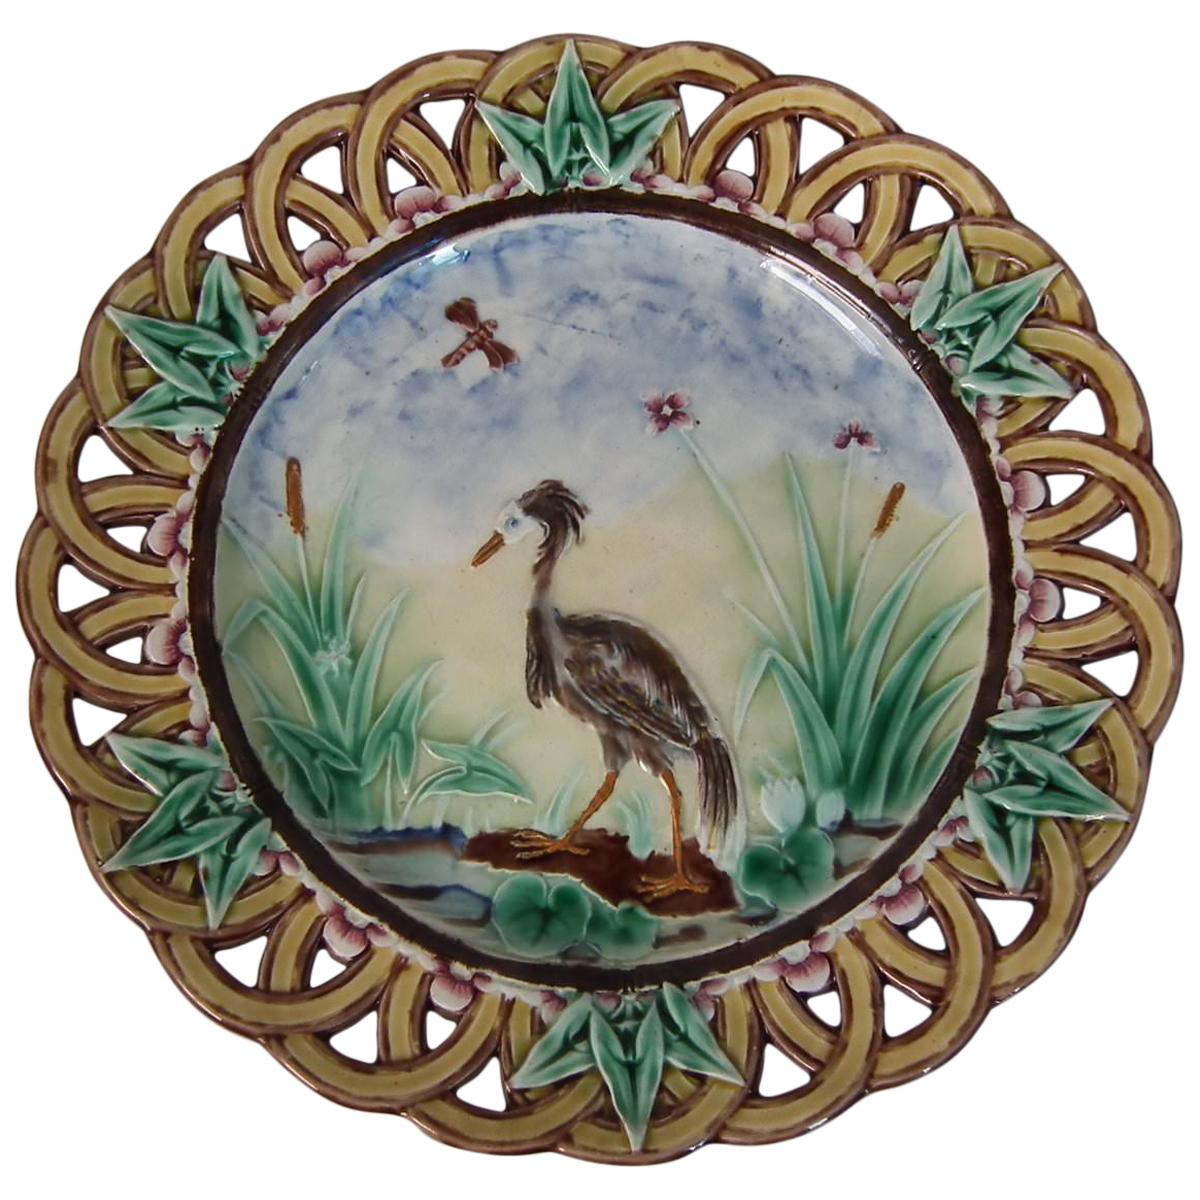 Wedgwood Majolica Heron Plate with Pierced Rim